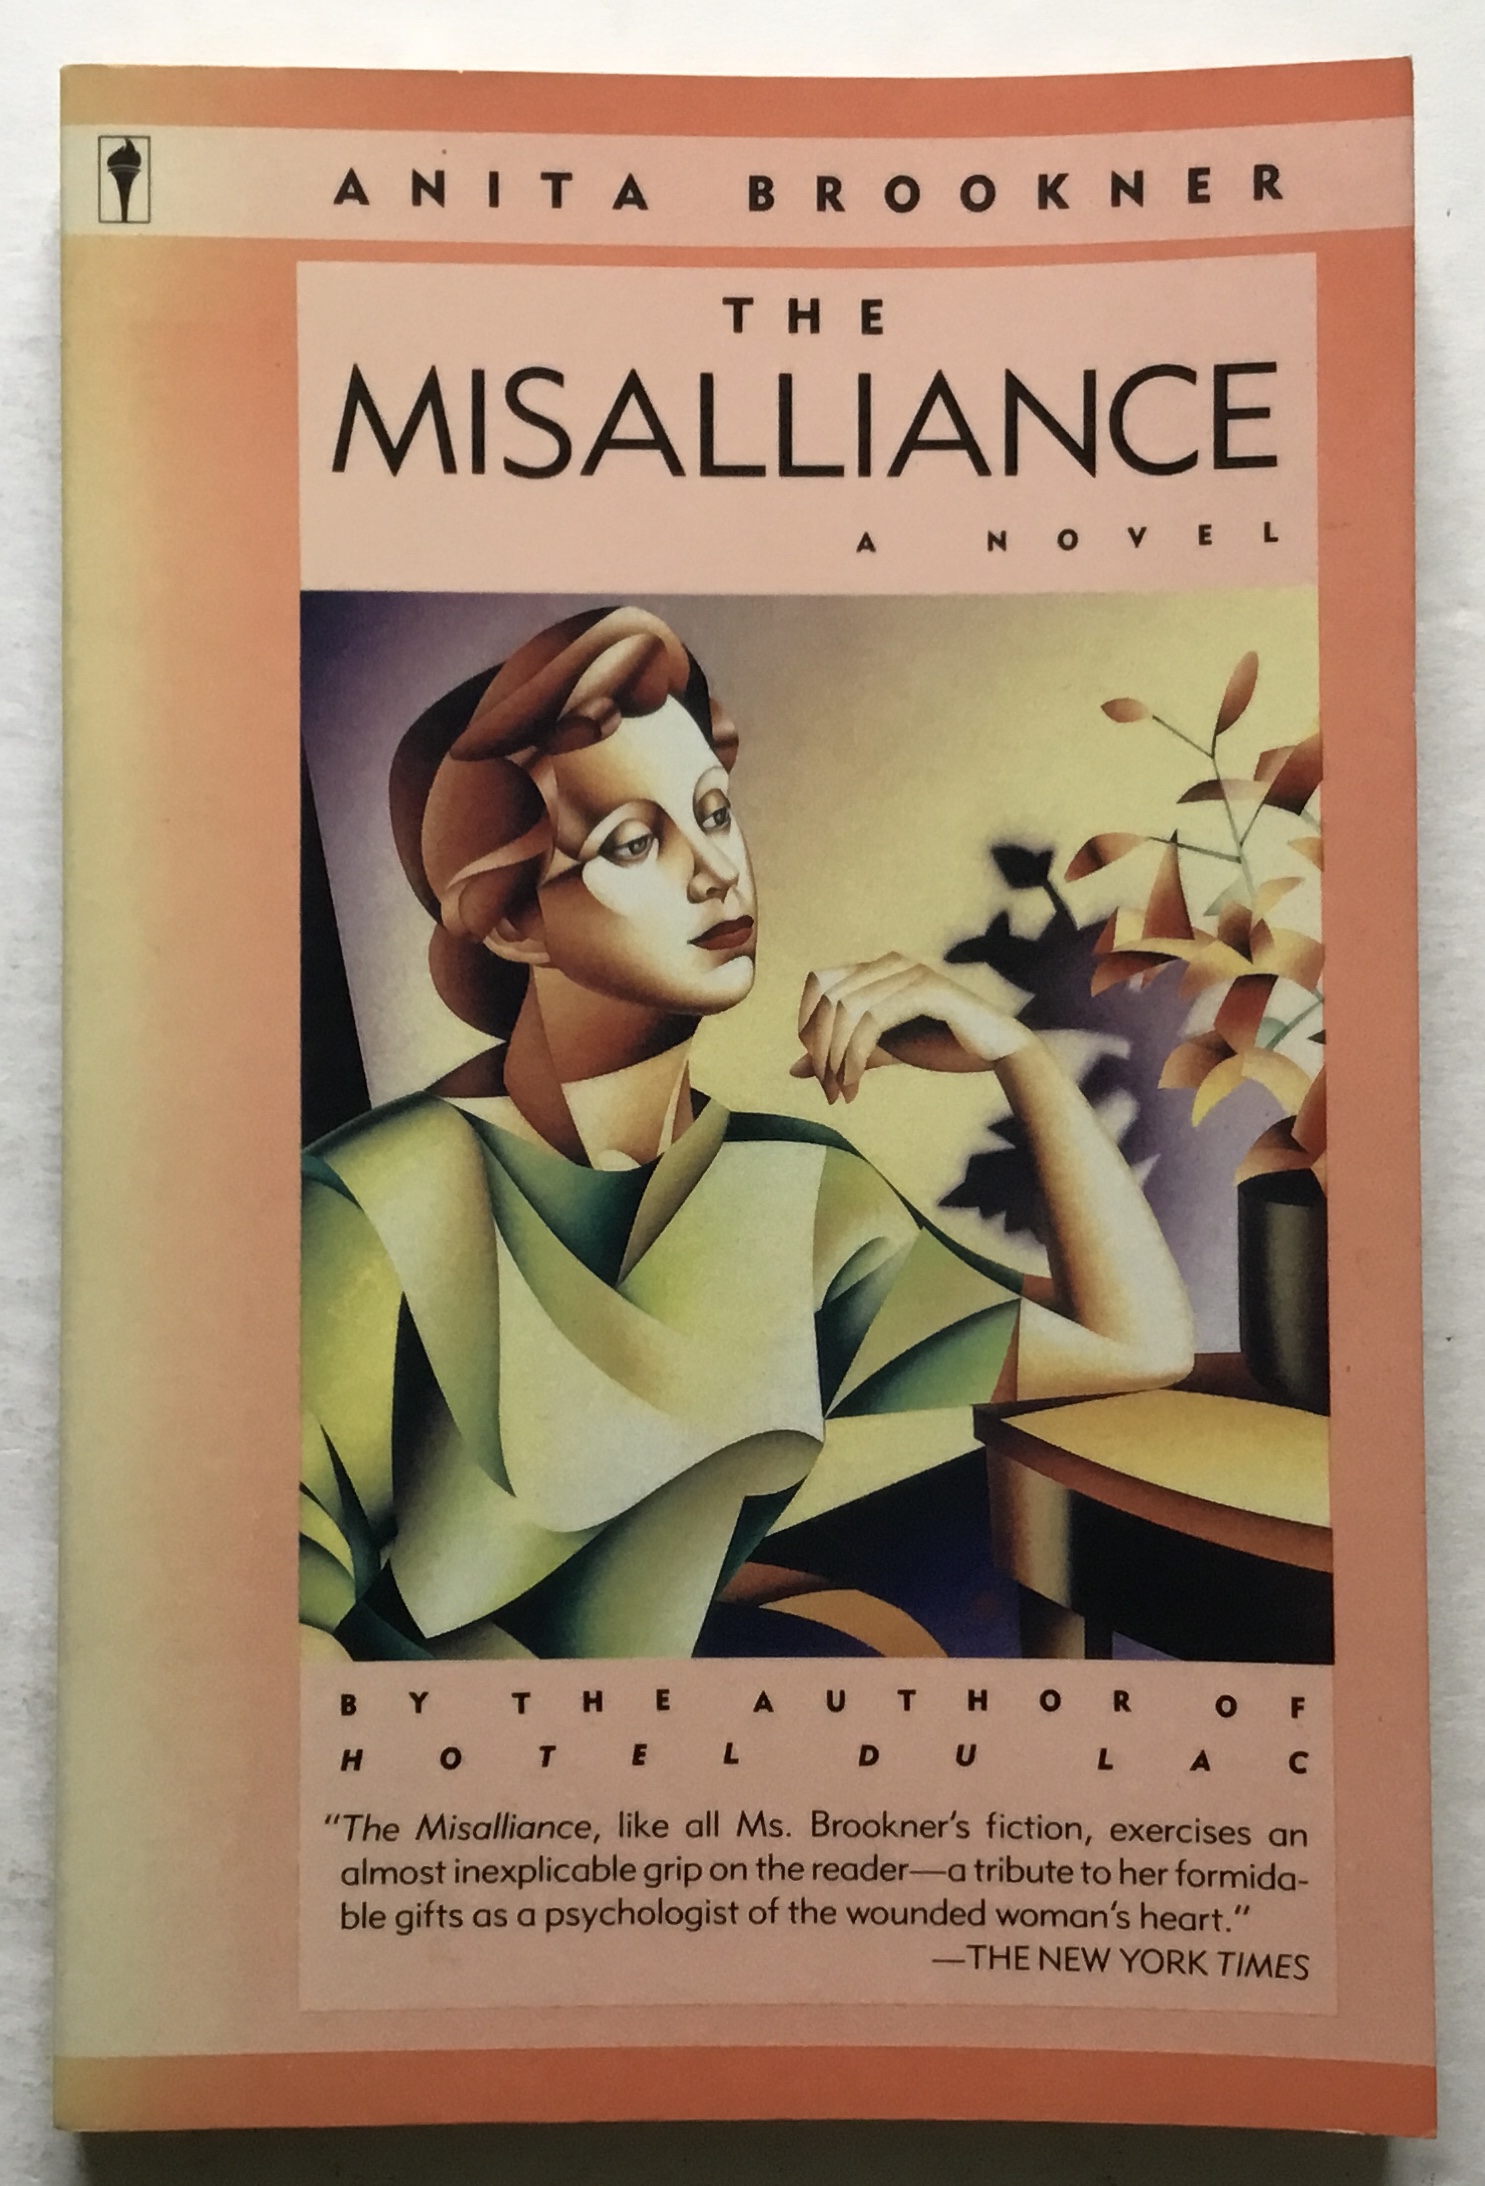 The Misalliance. A Novel. - Anita Brookner.